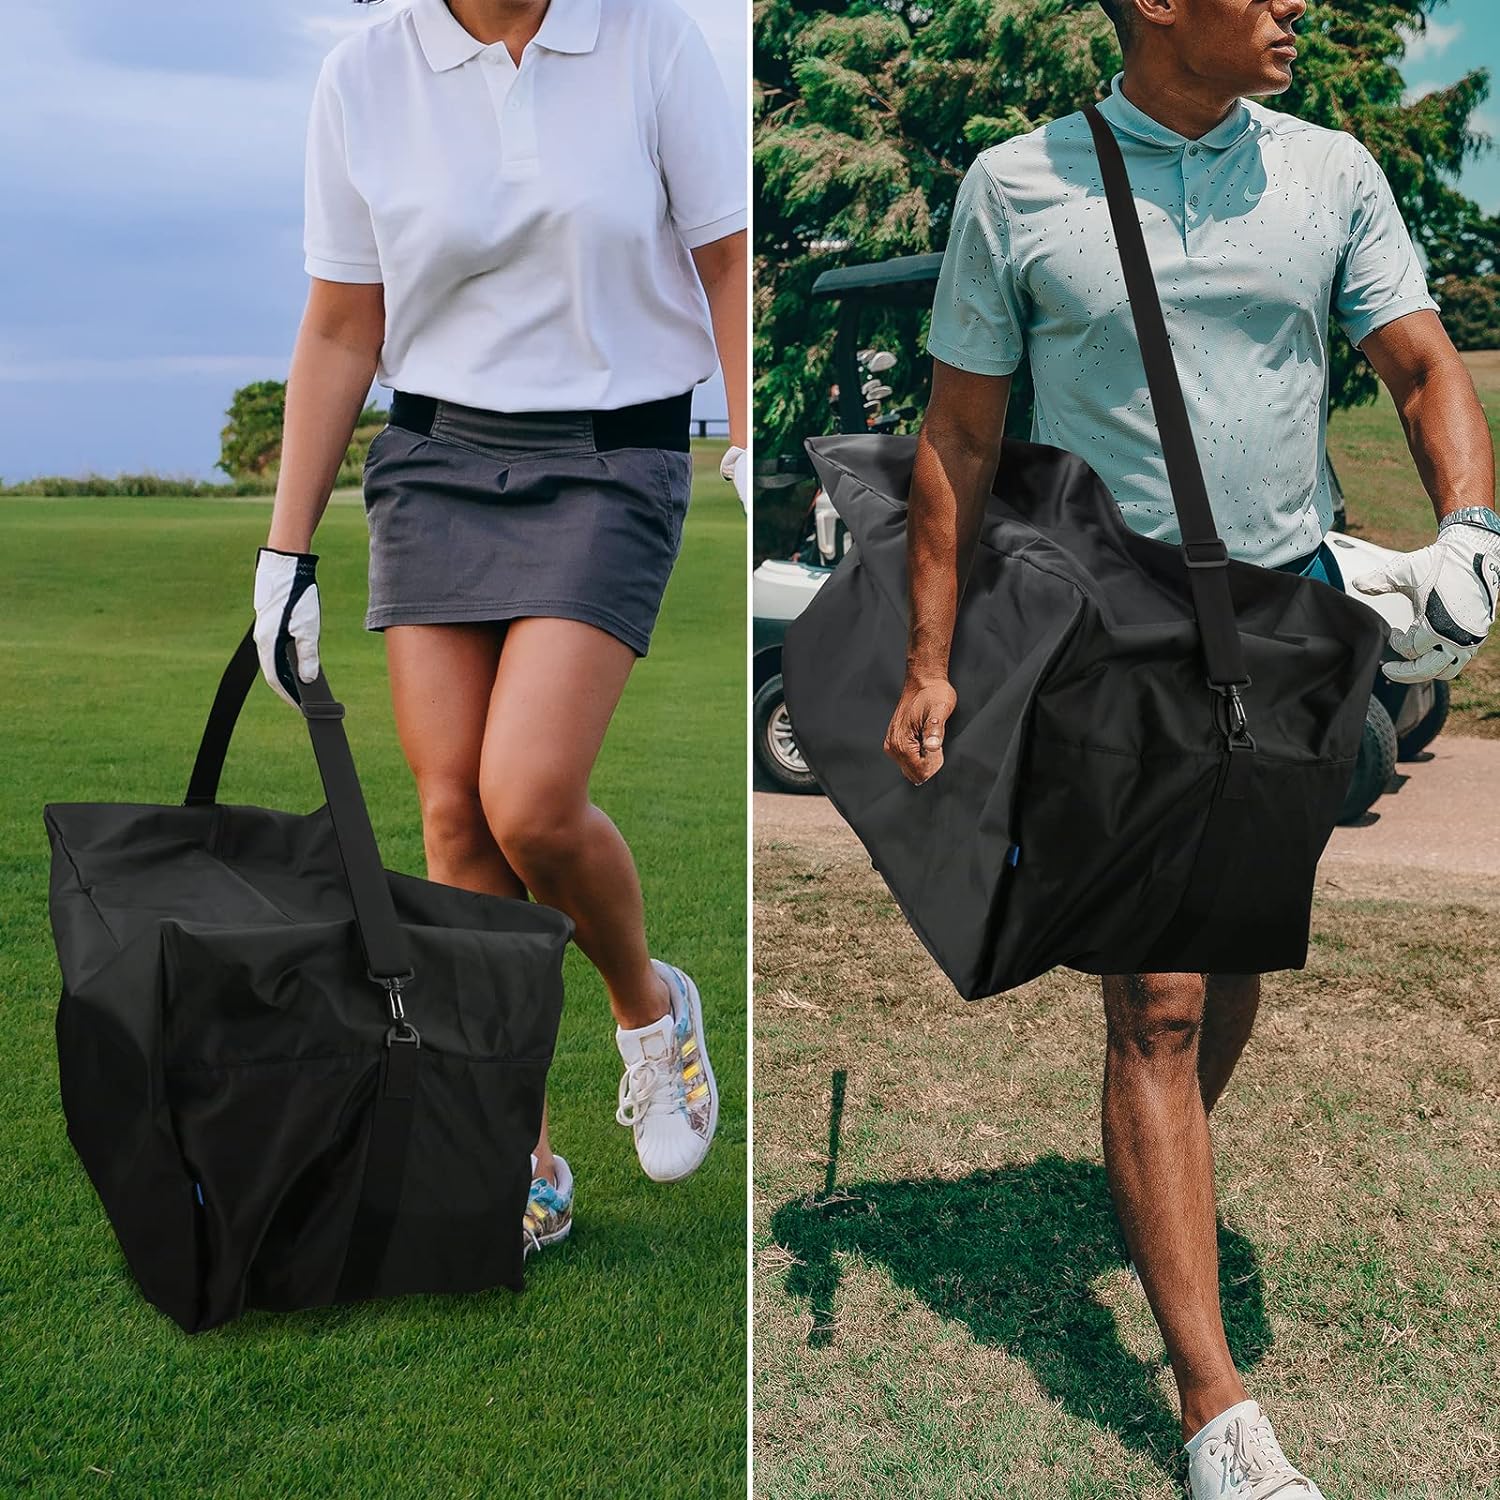 Xxerciz Golf Push Cart Bag for Caddytek, 3 Wheel Folding Carry Bag, Lightweight Carts Replacement Bag with Adjustable Straps Large Capacity